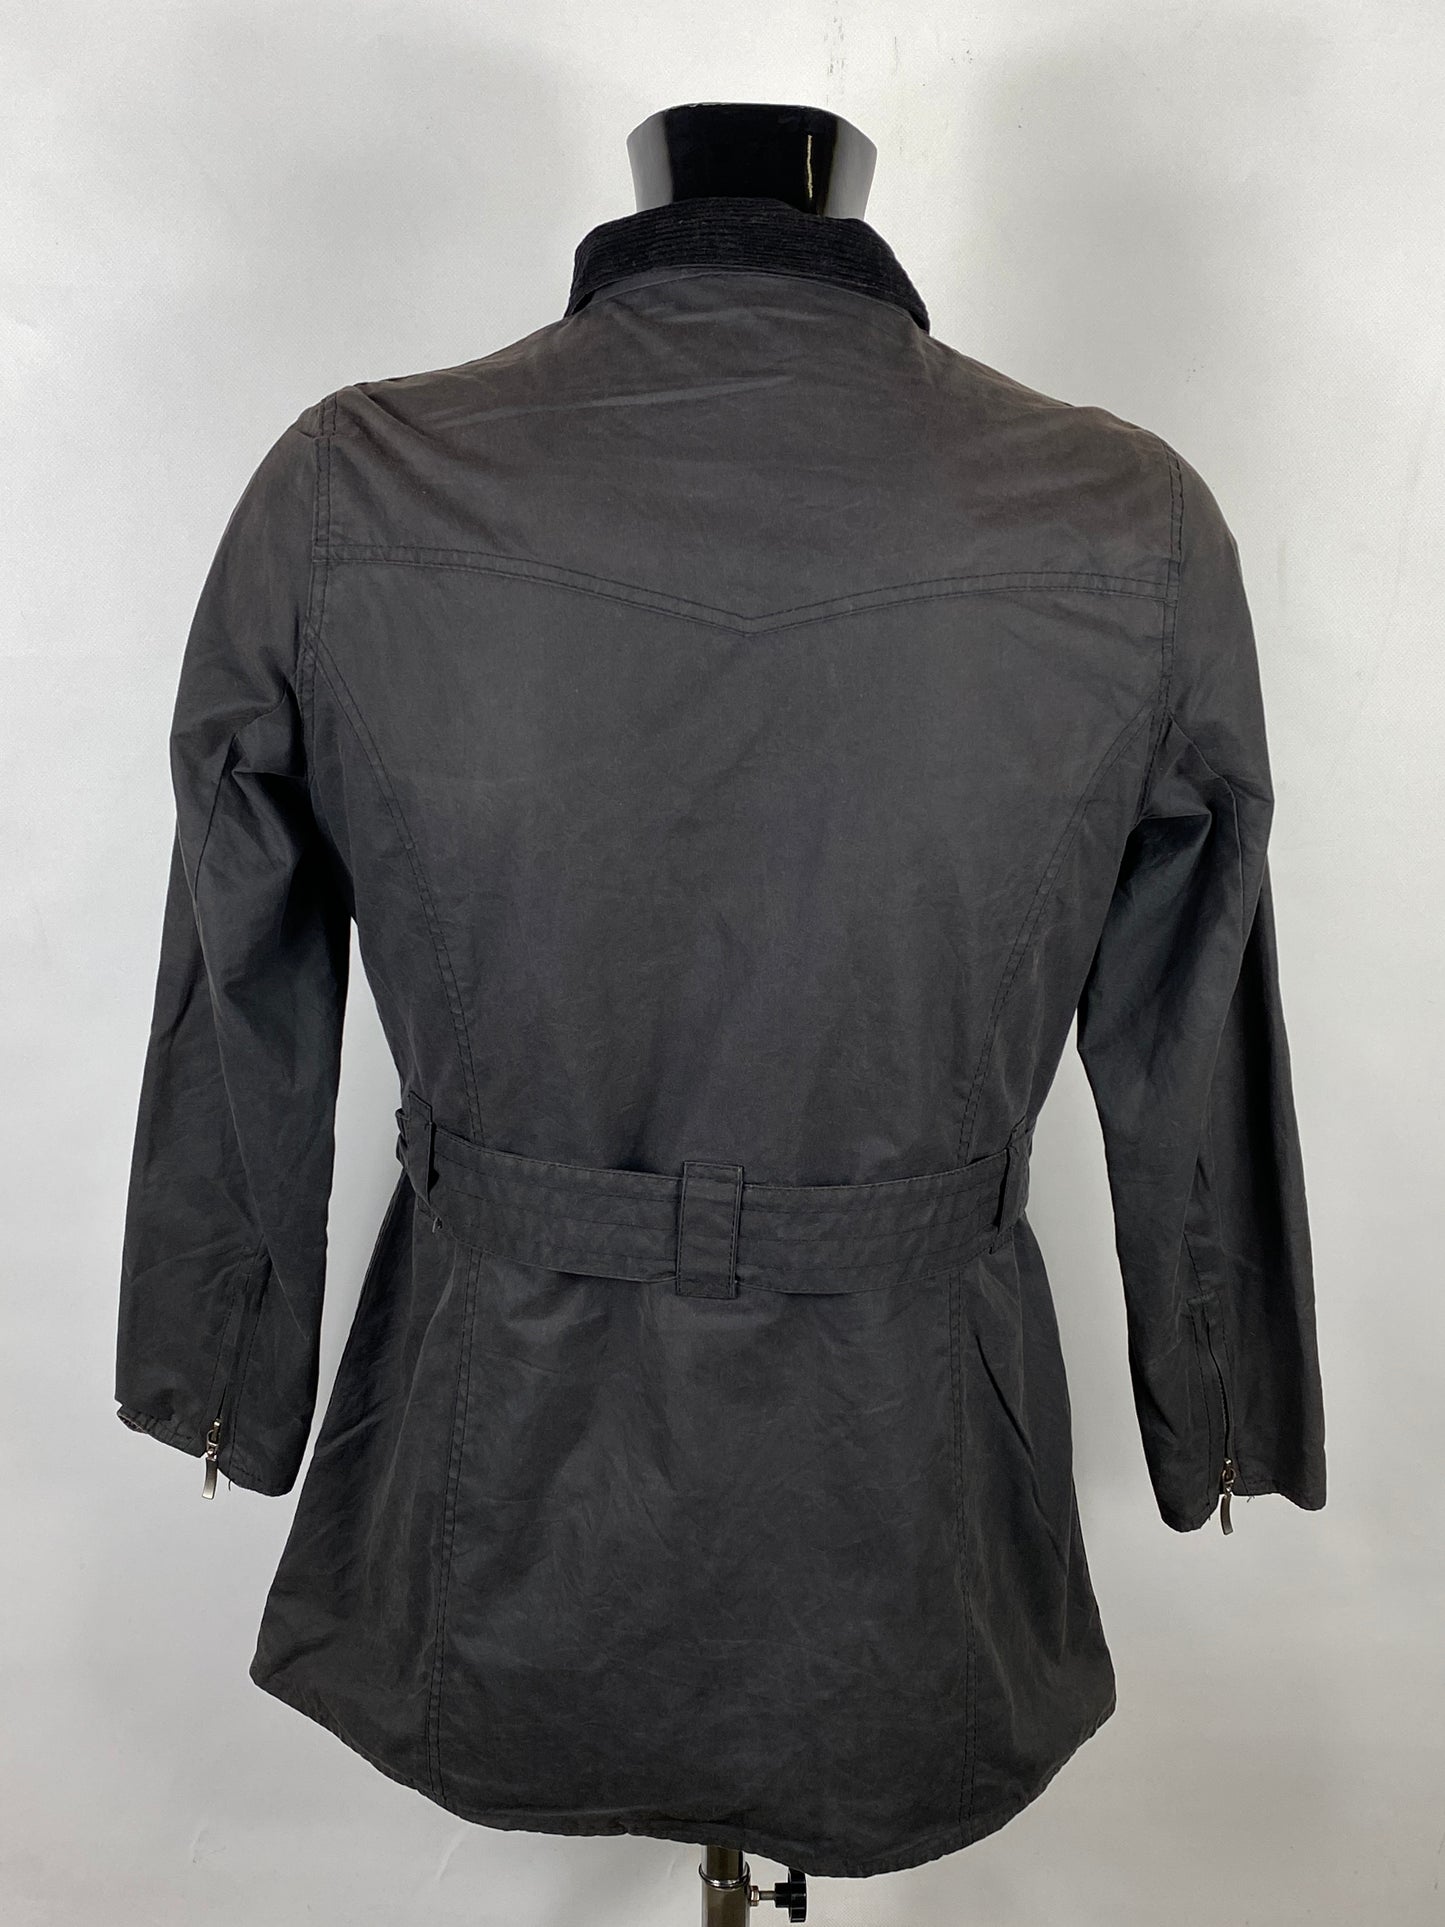 Giacca Barbour donna nera utility mac tg.42 Medium Lady Wax Black Jacket UK12